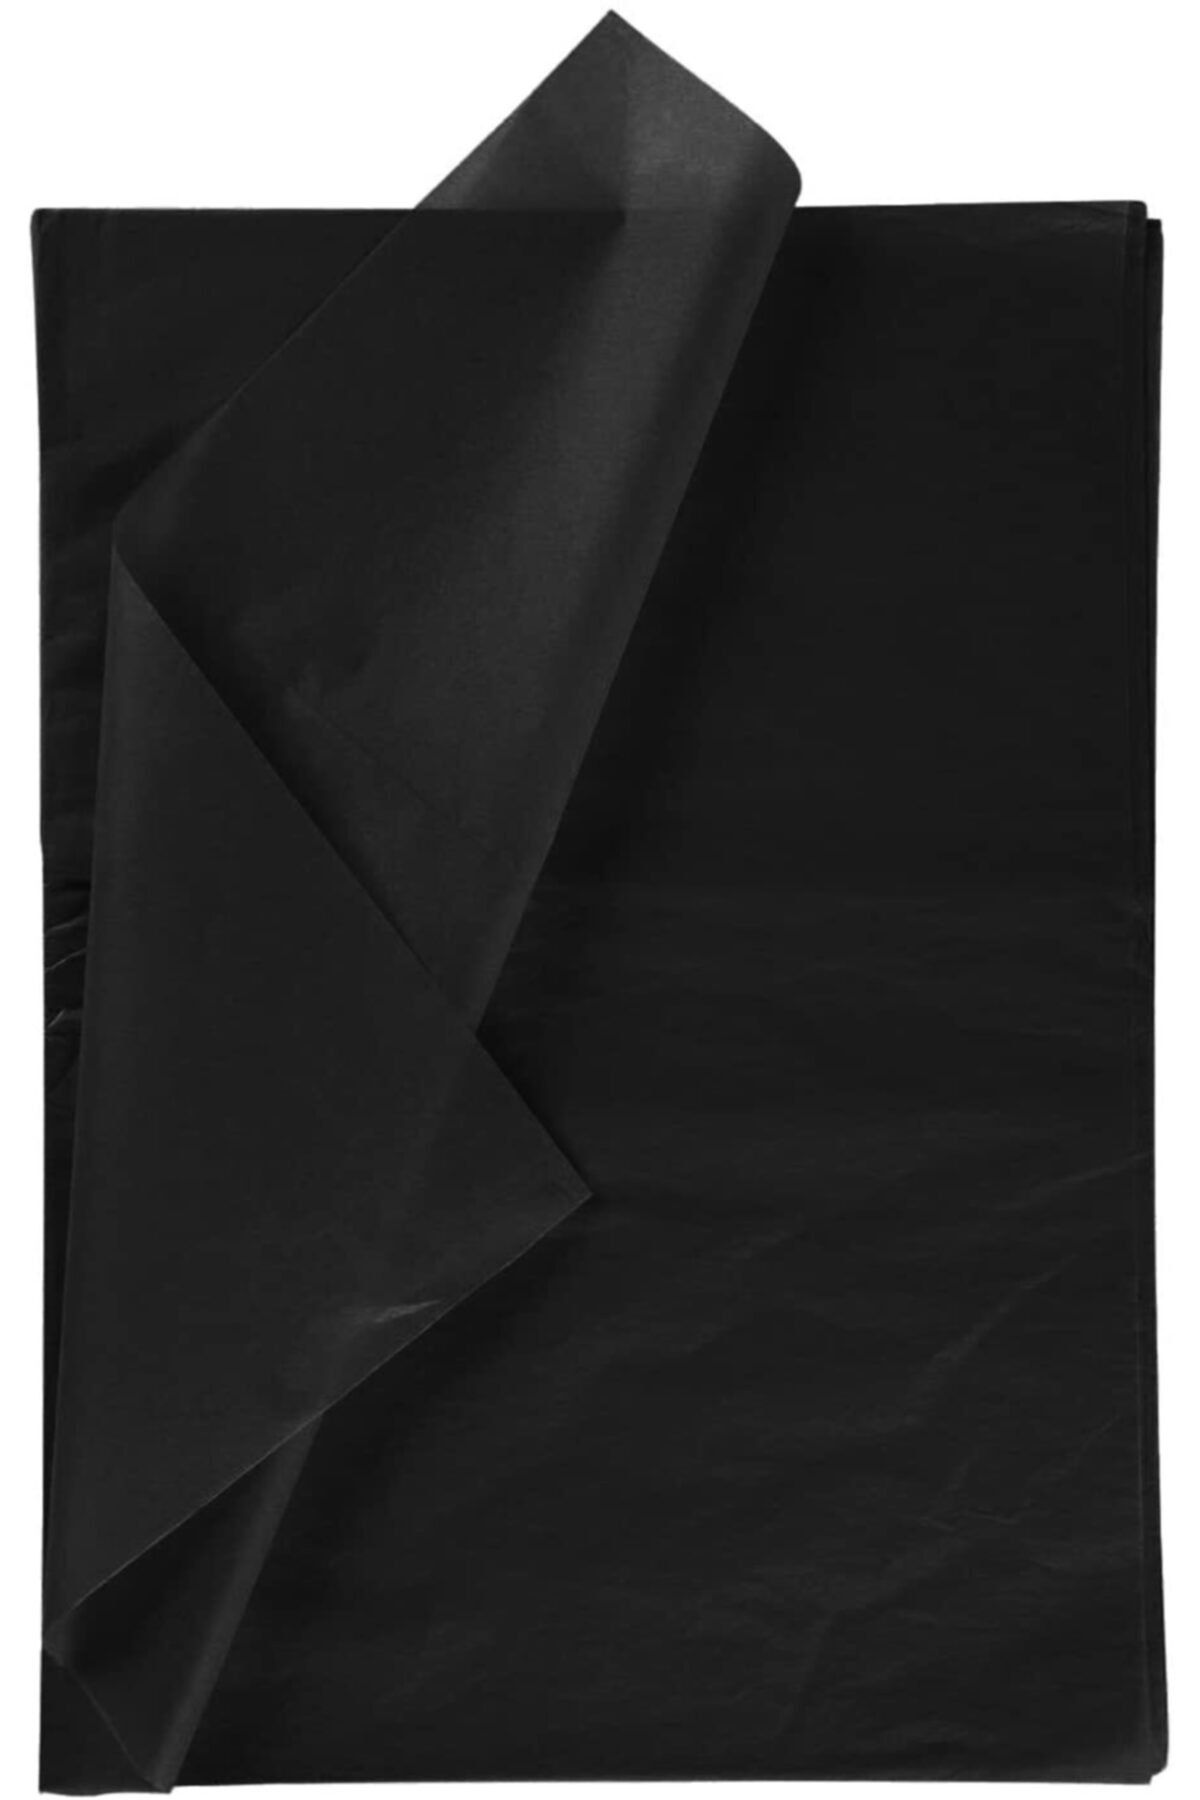 Sunalis Siyah Pelur Kağıt 35 X 50 Cm (10 Adet)